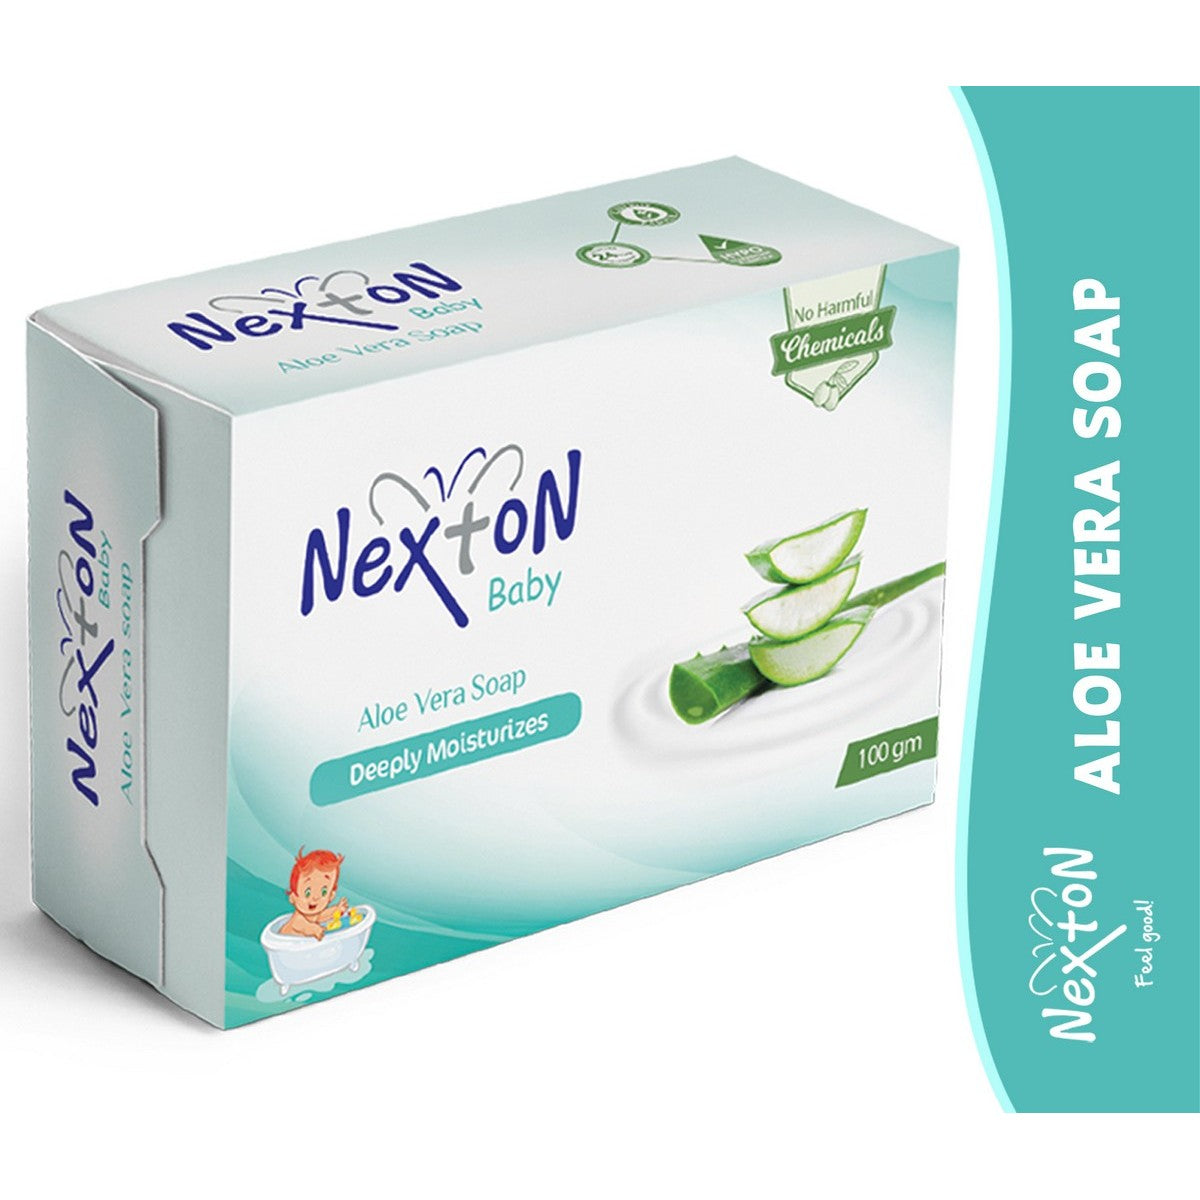 Nexton baby soap